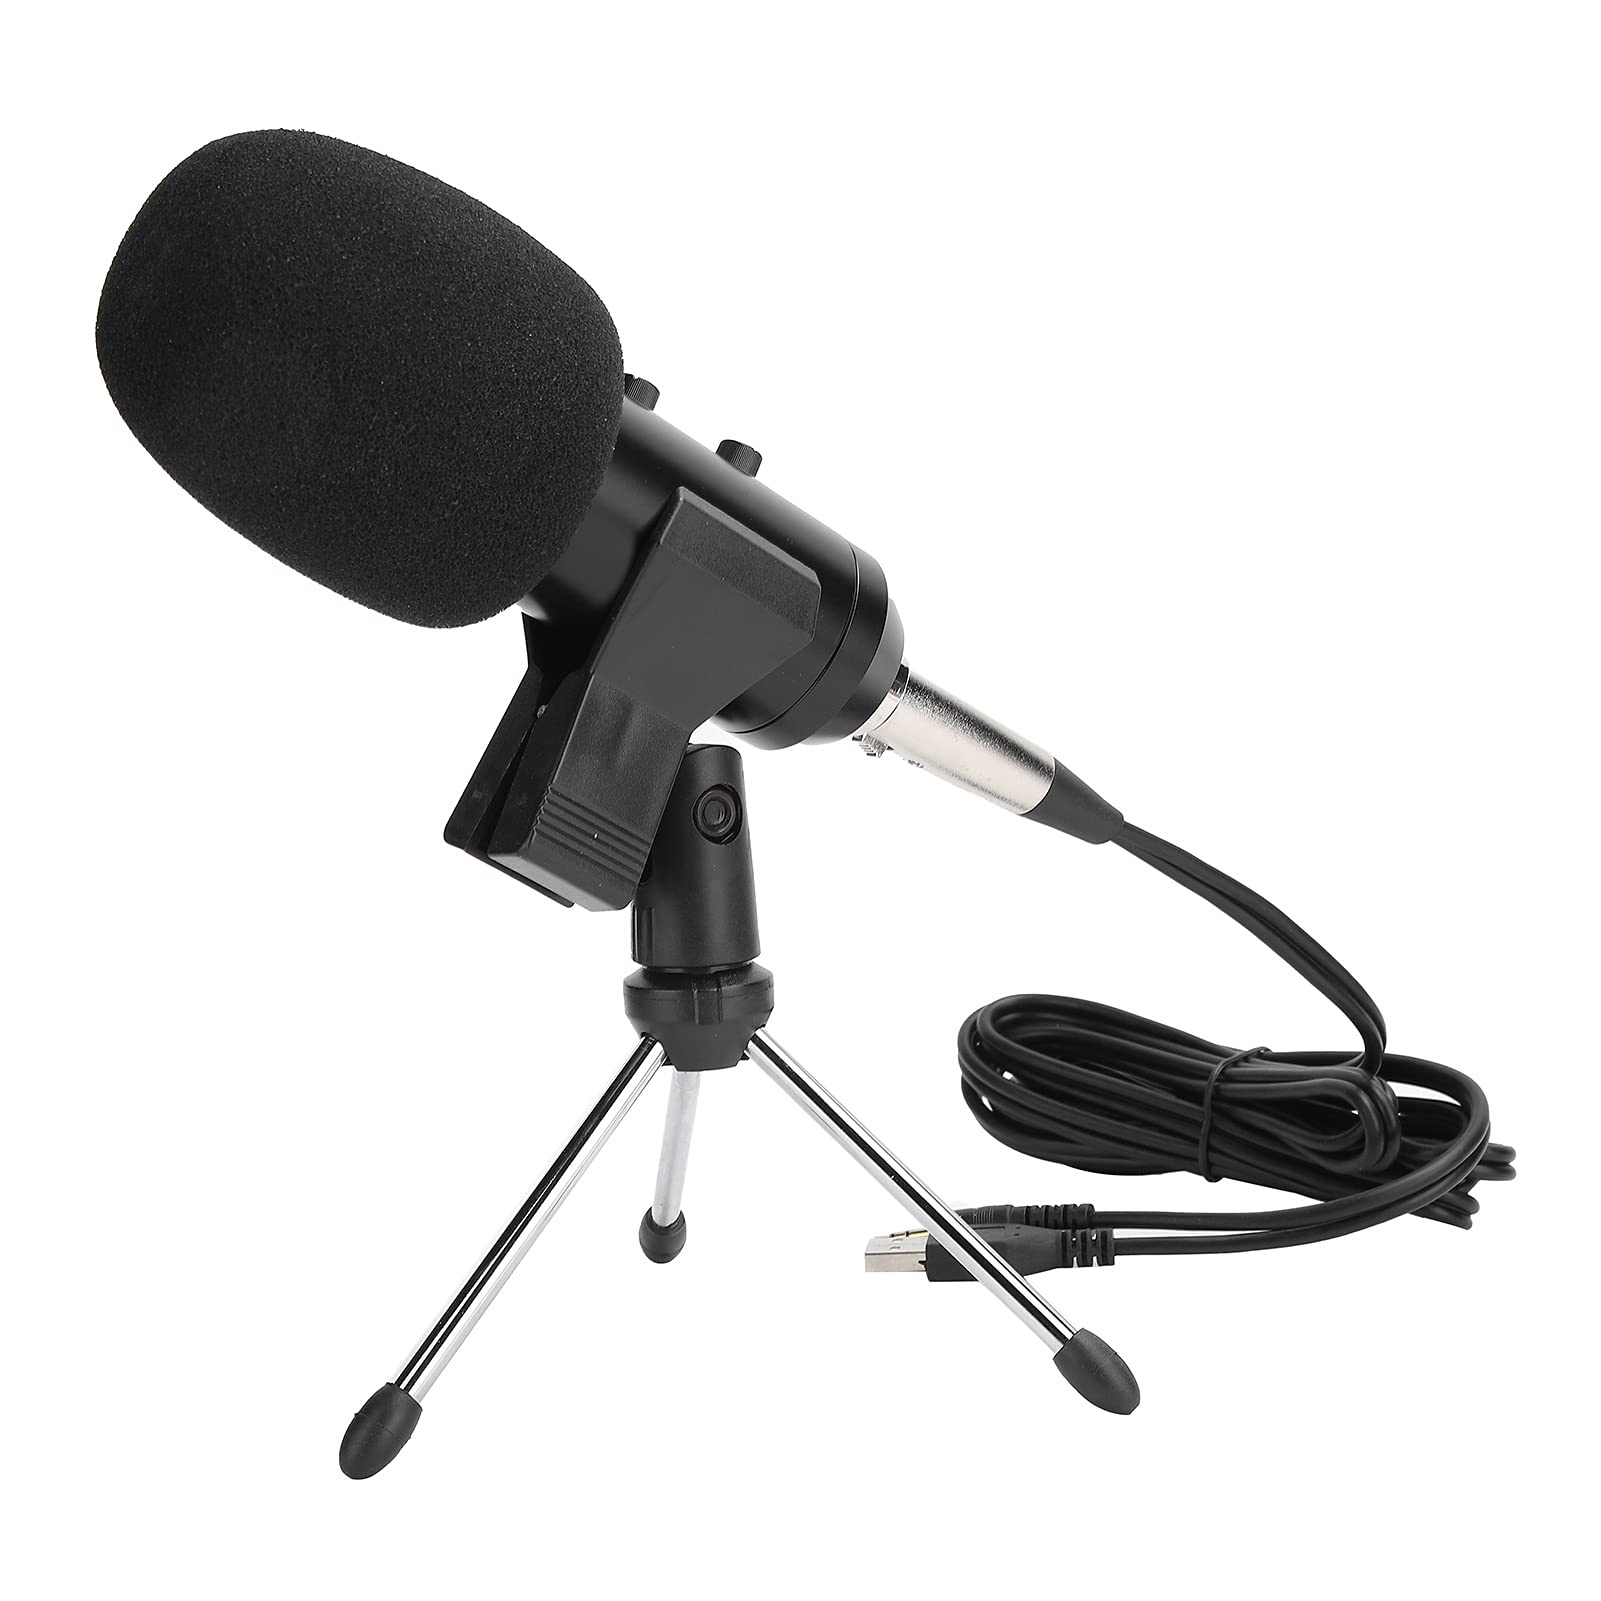 Kondensatormikrofon, USB-Desktop-Mikrofon Plug And Play PC/Telefon-Mikrofon-Mikrofon-Kit mit Stativ für Professionelle Studio-Übertragungen(Schwarz)